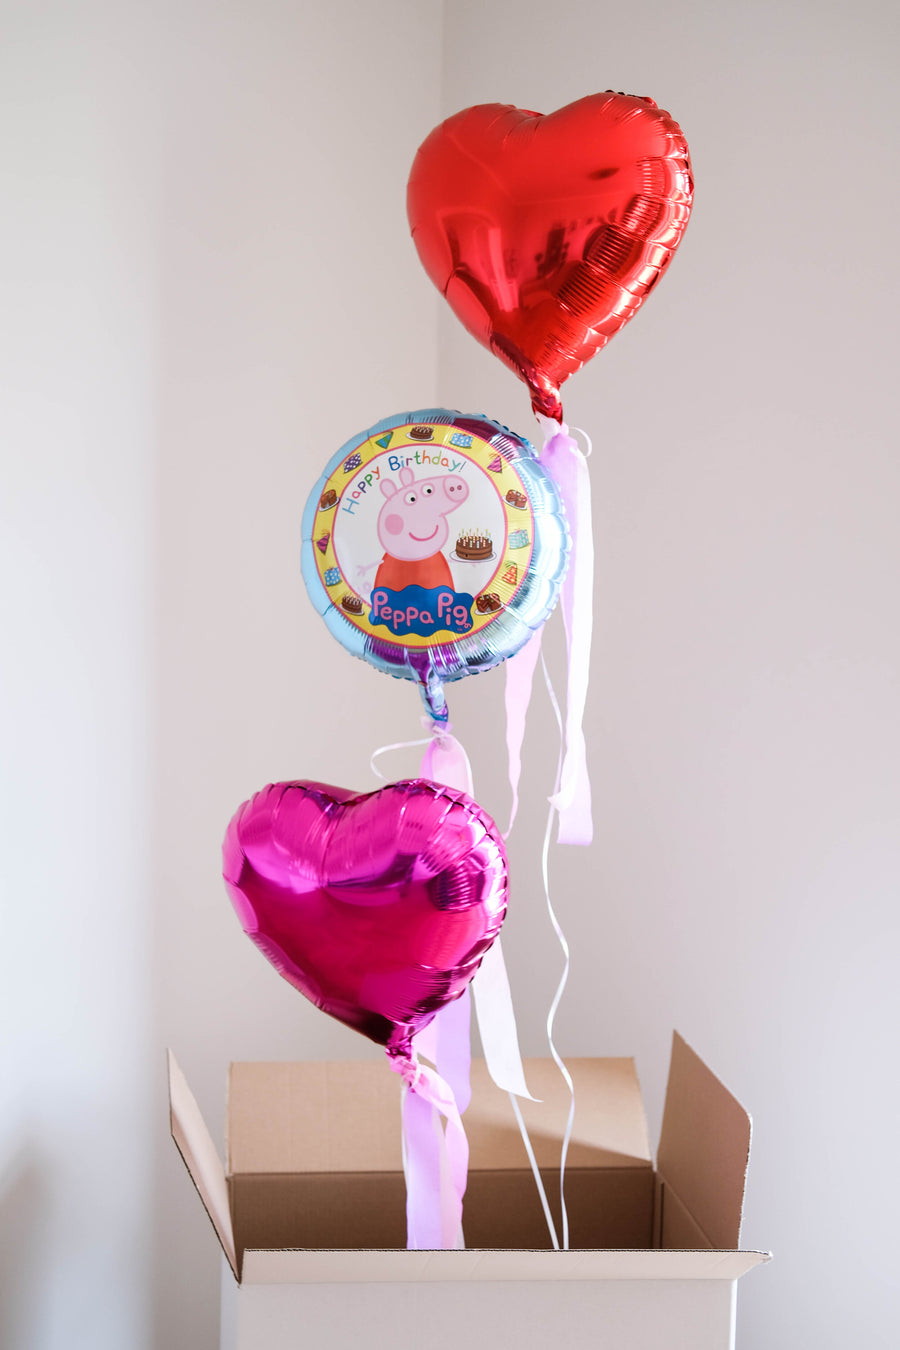 Happy Birthday Peppa Pig set of 3 balloons